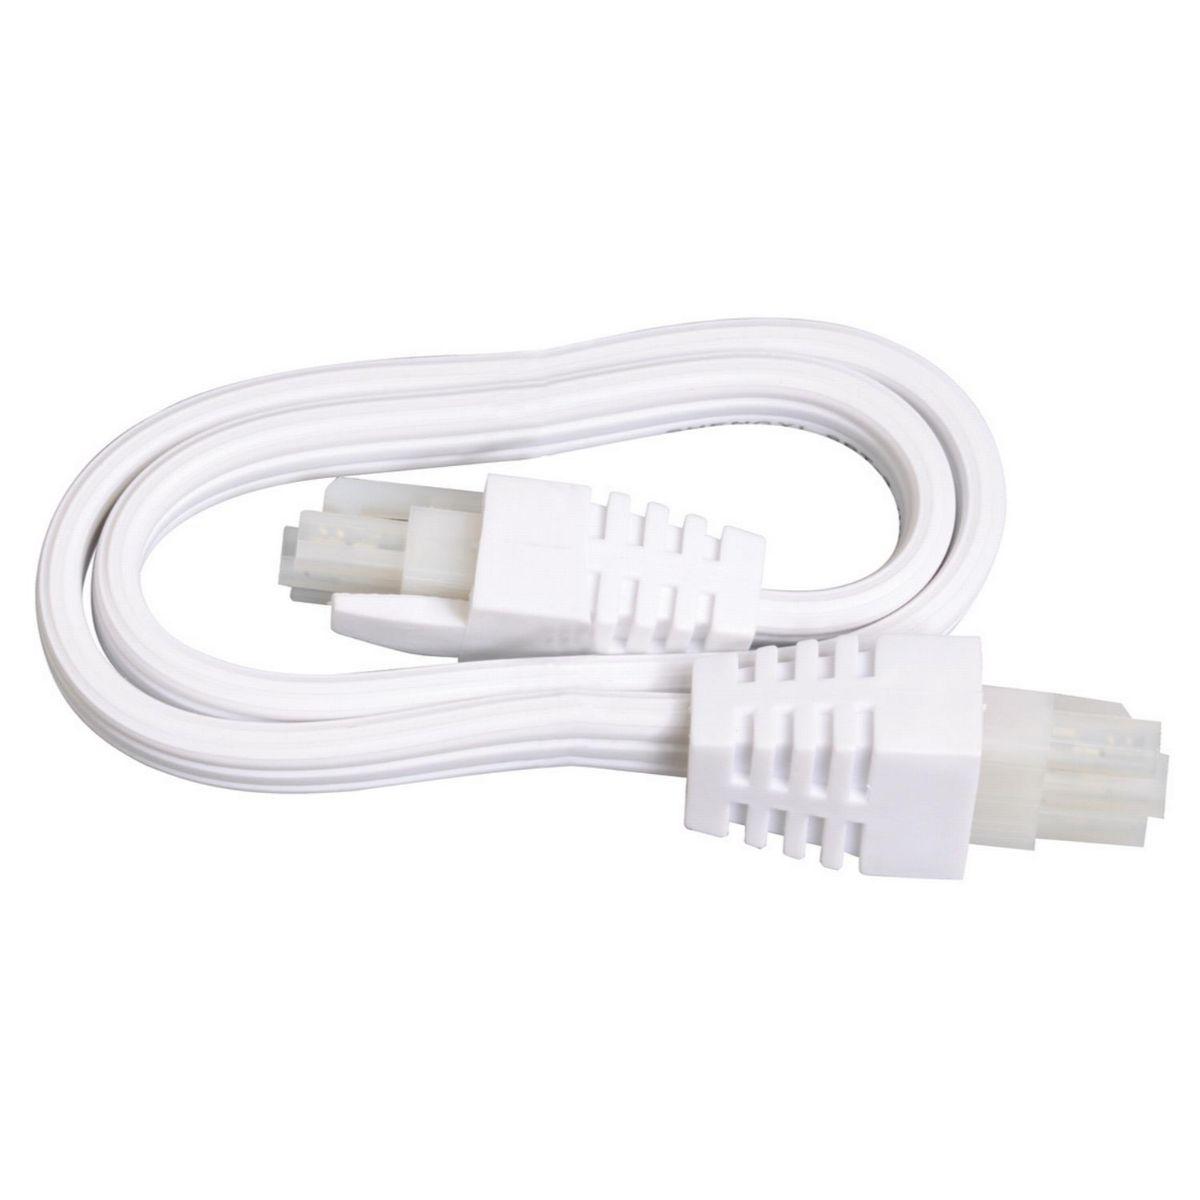 36in. Interconnect Cord for Elena Task Lighting, White